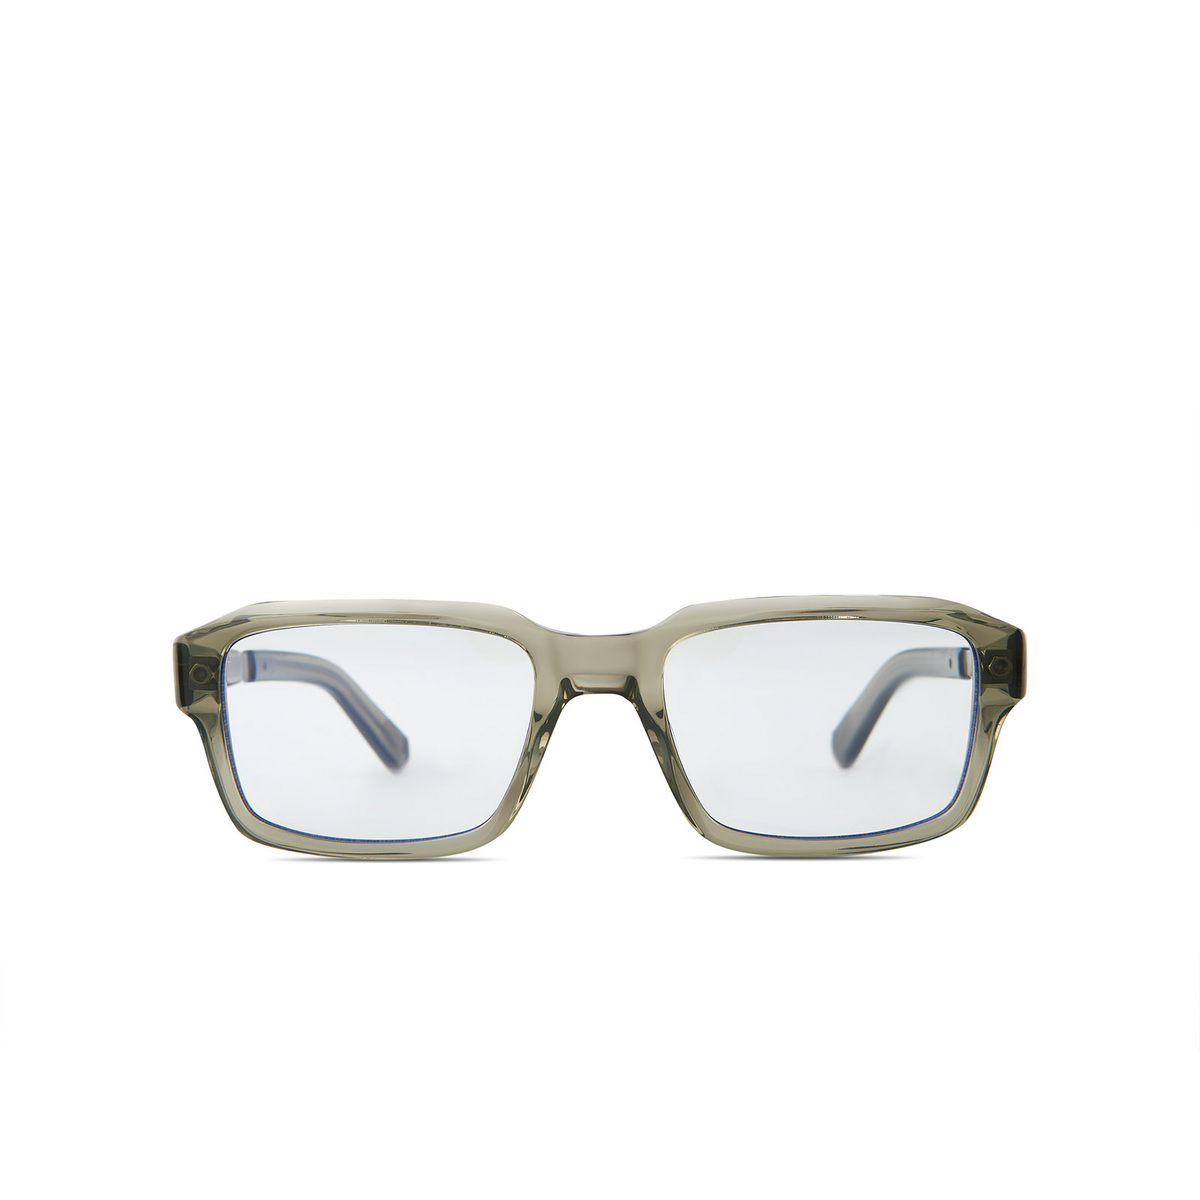 Mr. Leight KANE C Eyeglasses HUN-SV-DEM SKY Hunter-Silver-Demo Sky - front view